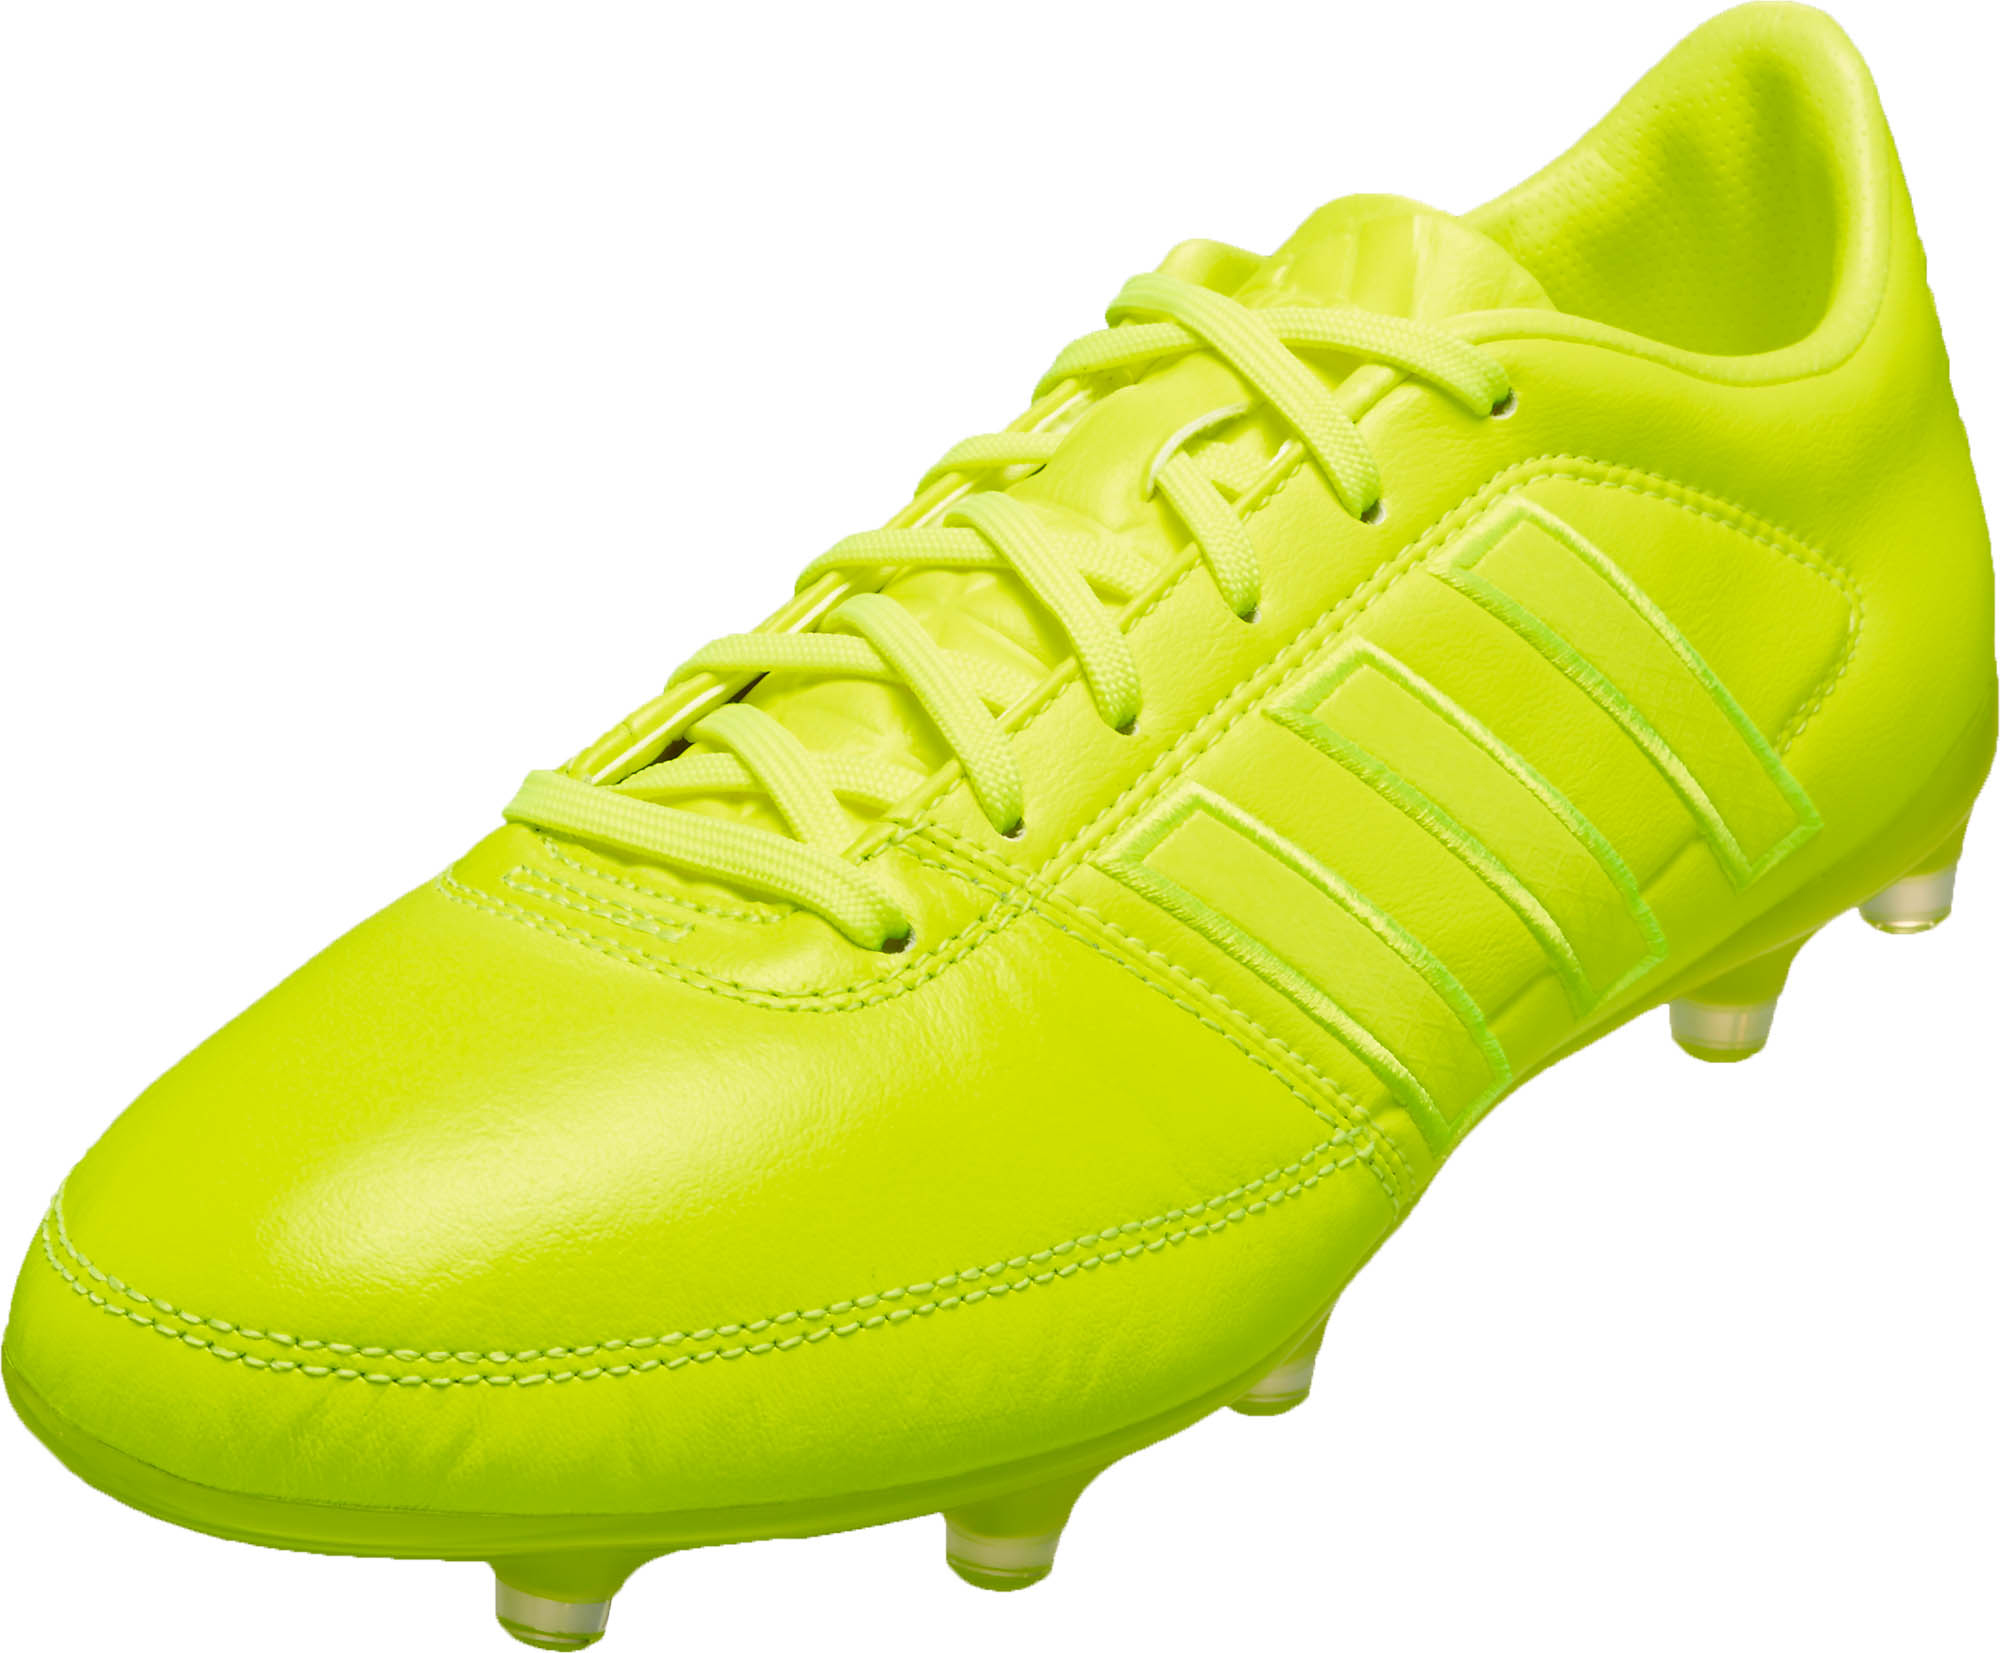 bright yellow adidas shoes